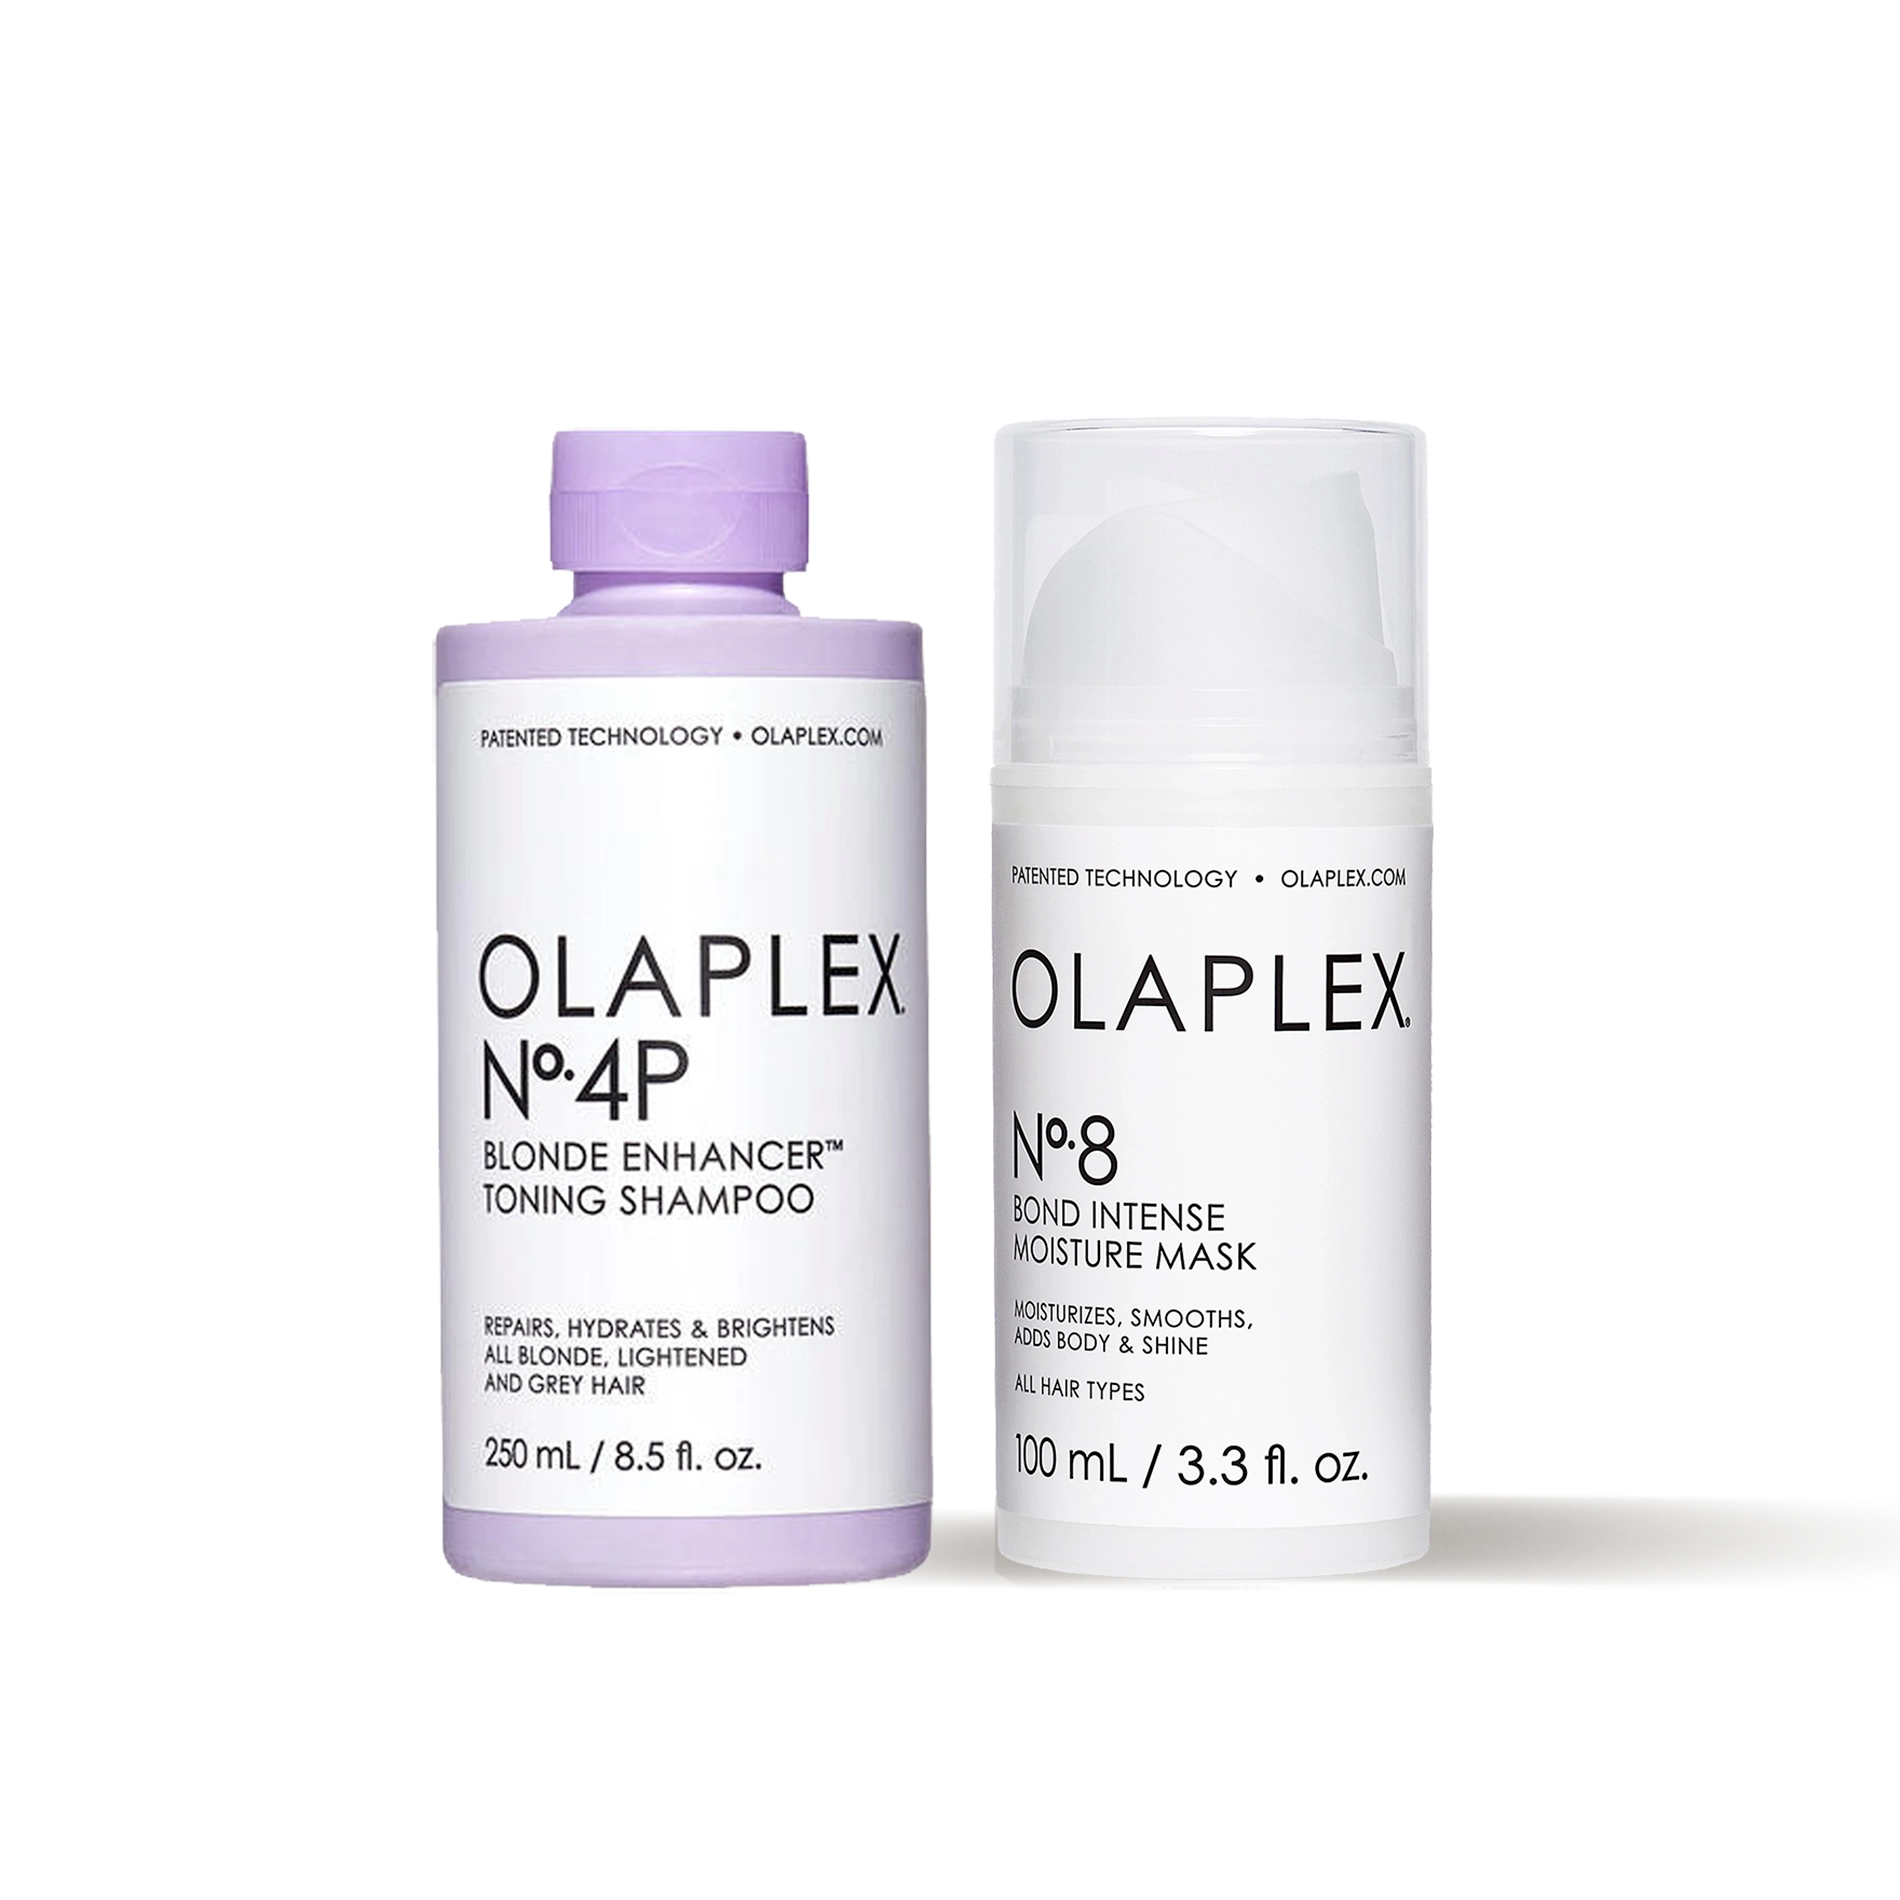 Duo Entretien du blond Olaplex 4P Olaplex 8 - Kits soins cheveux - Thomas Tuccinardi